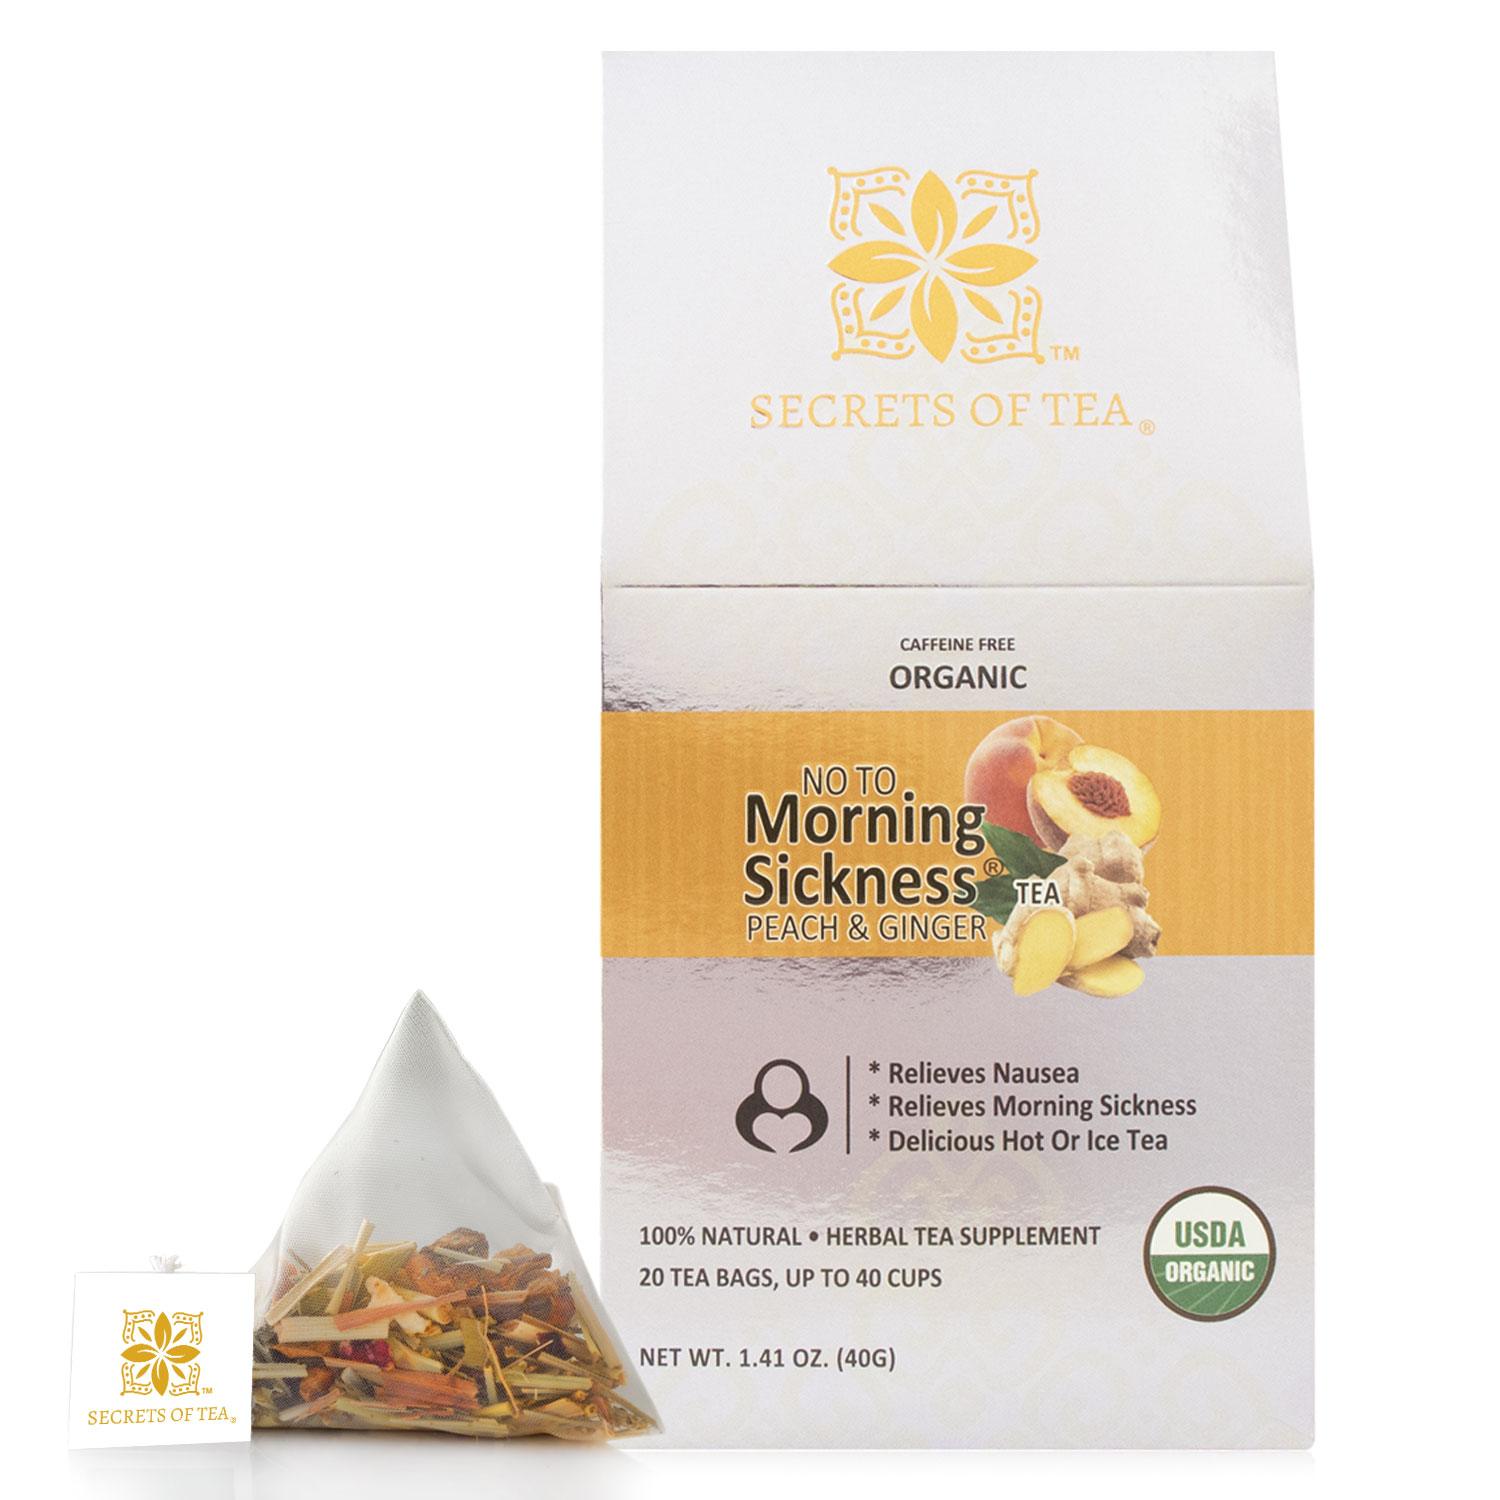 Secrets of Tea No-to-Morning-Sickness Ginger Peach Tea 2 innerpacks per case 2.0 oz